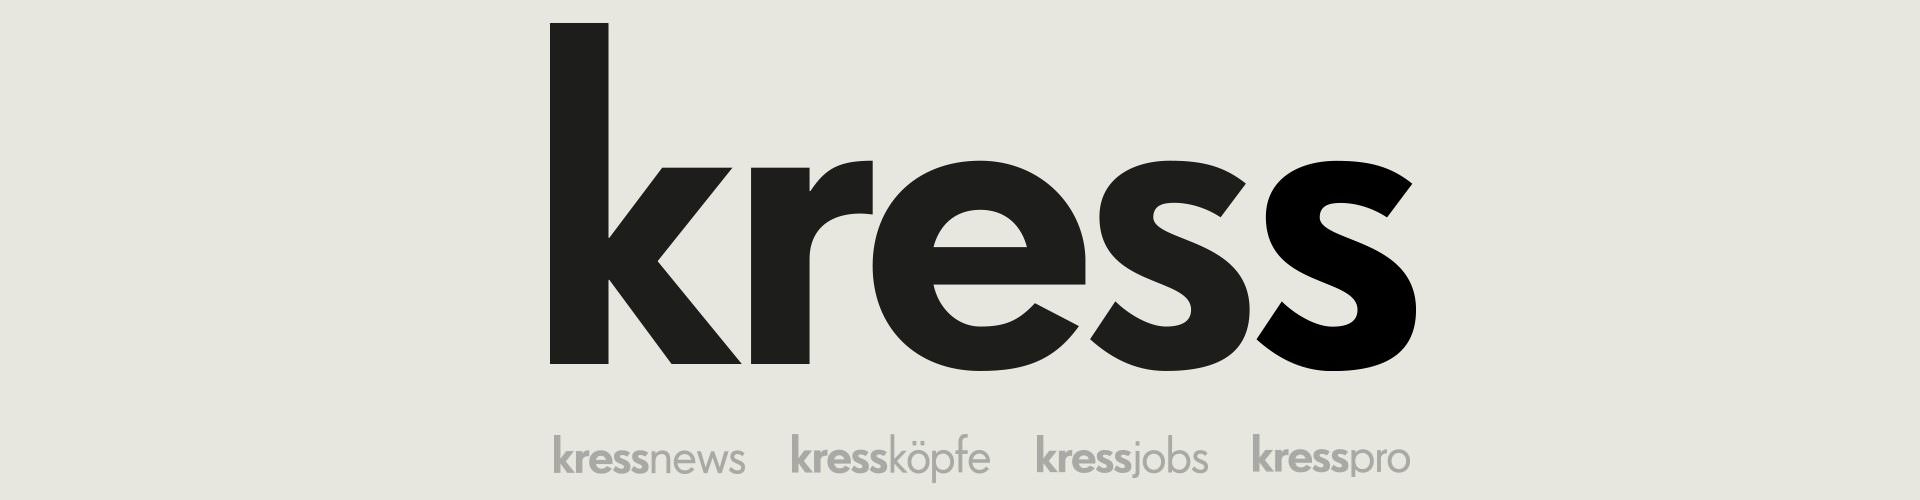 kress-logo